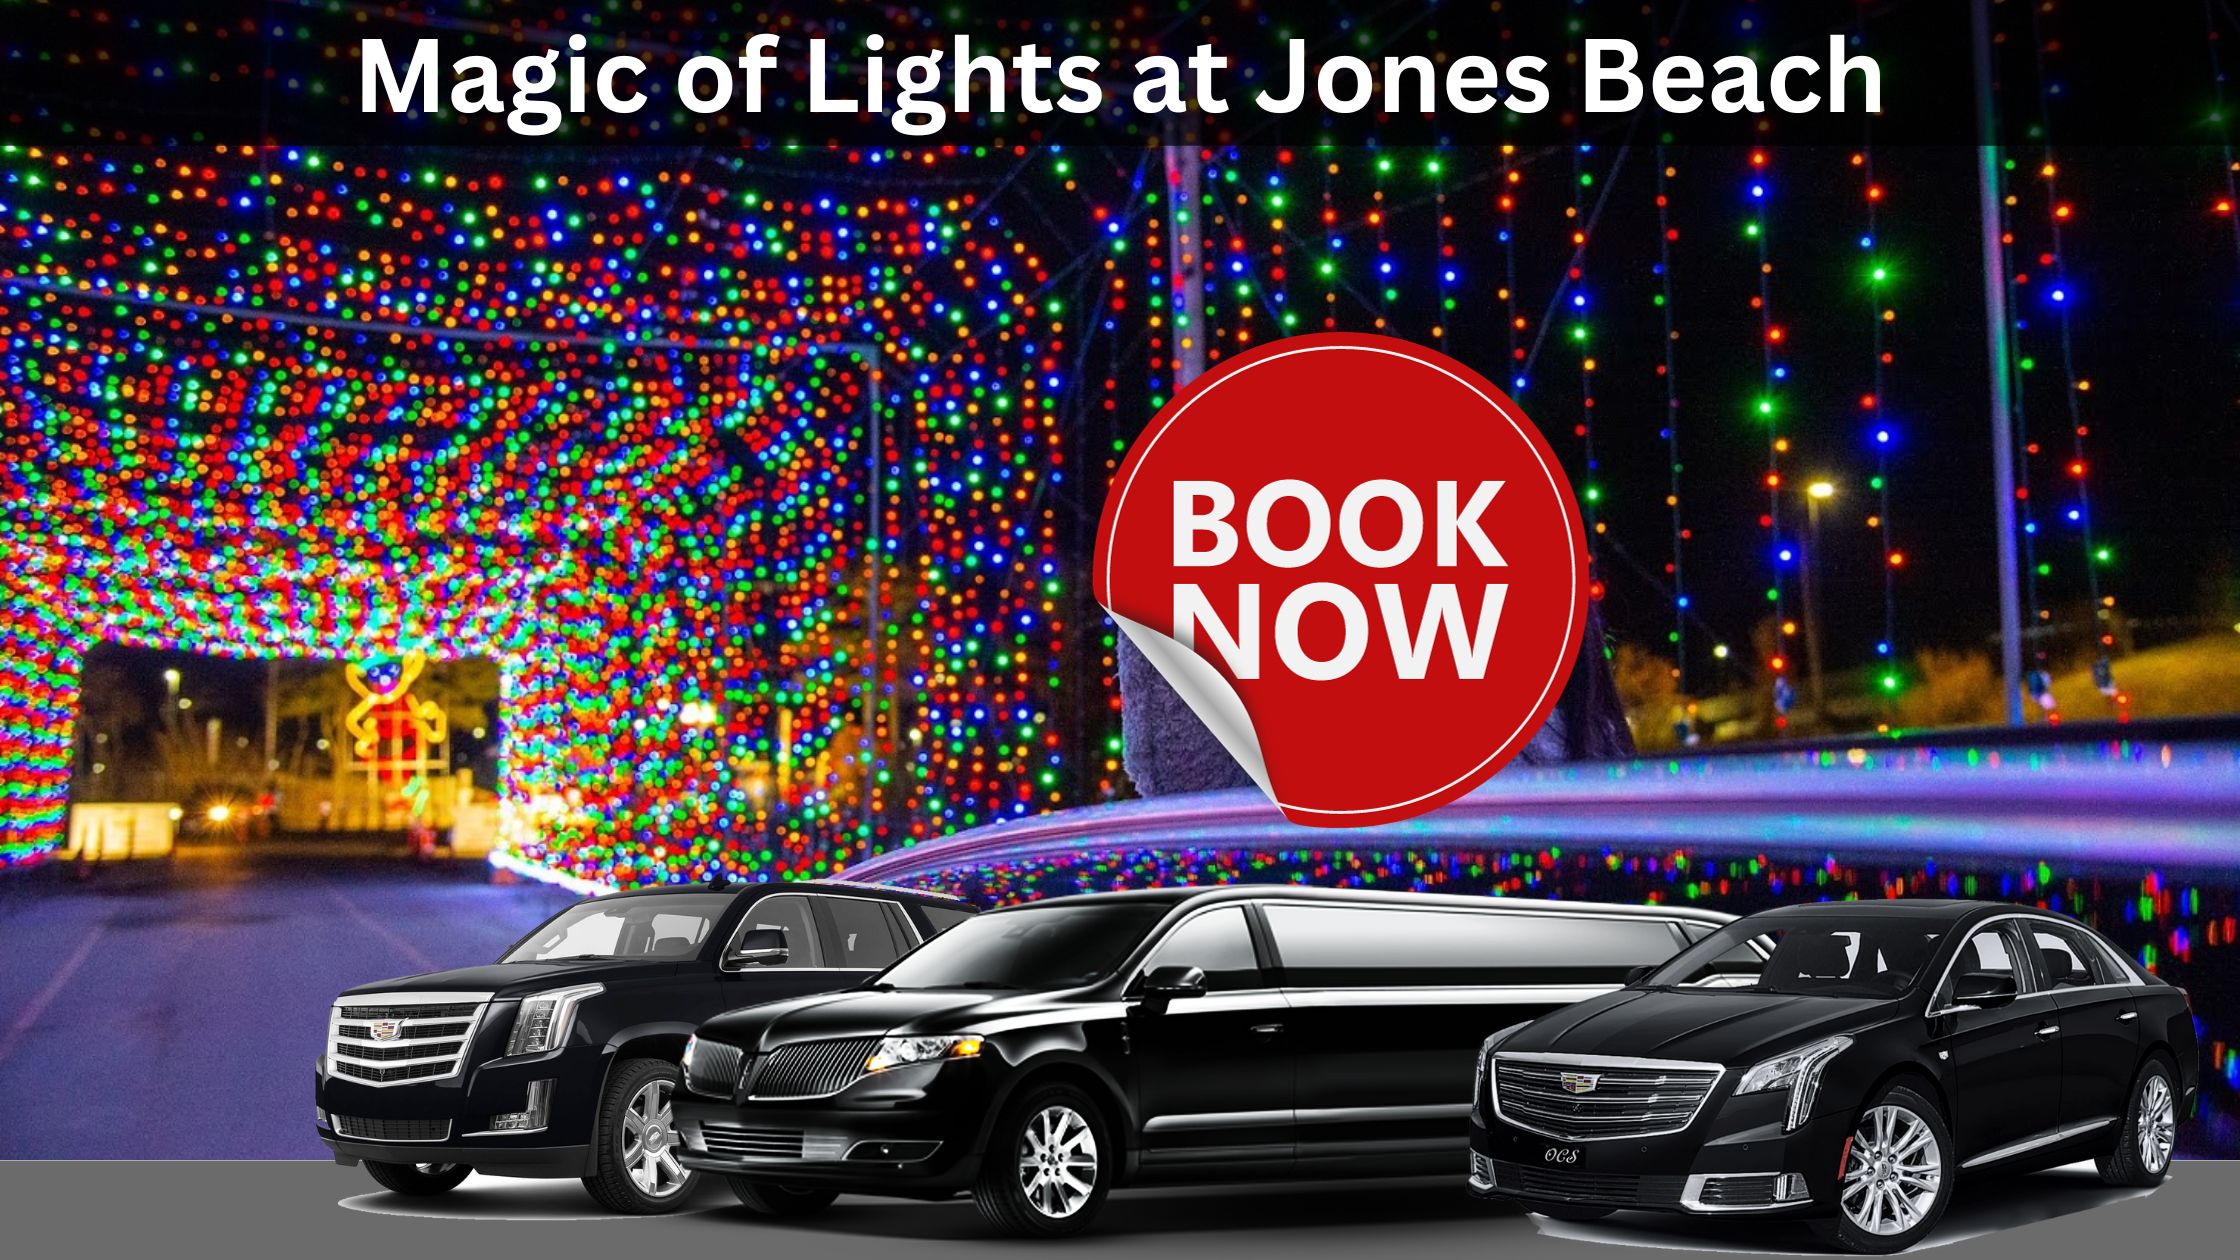 Limo Service to Magic of Lights Jones Beach